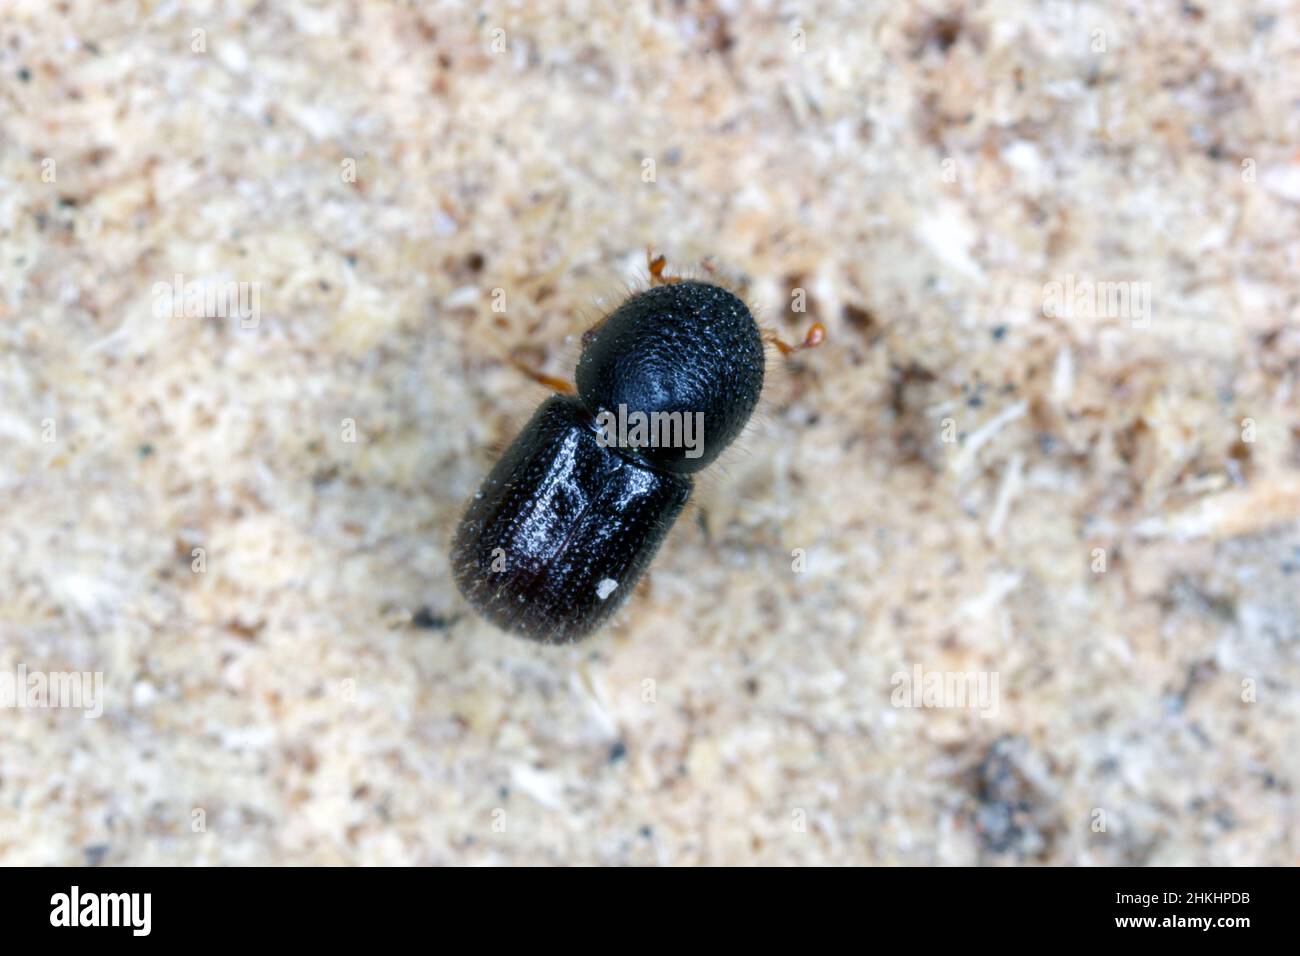 Anisandrus - Xyleborus dispar (pear blight beetle) - ambrosia beetle, female. It is a species of bark beetles (subfamily Scolytinae) a pest. Stock Photo